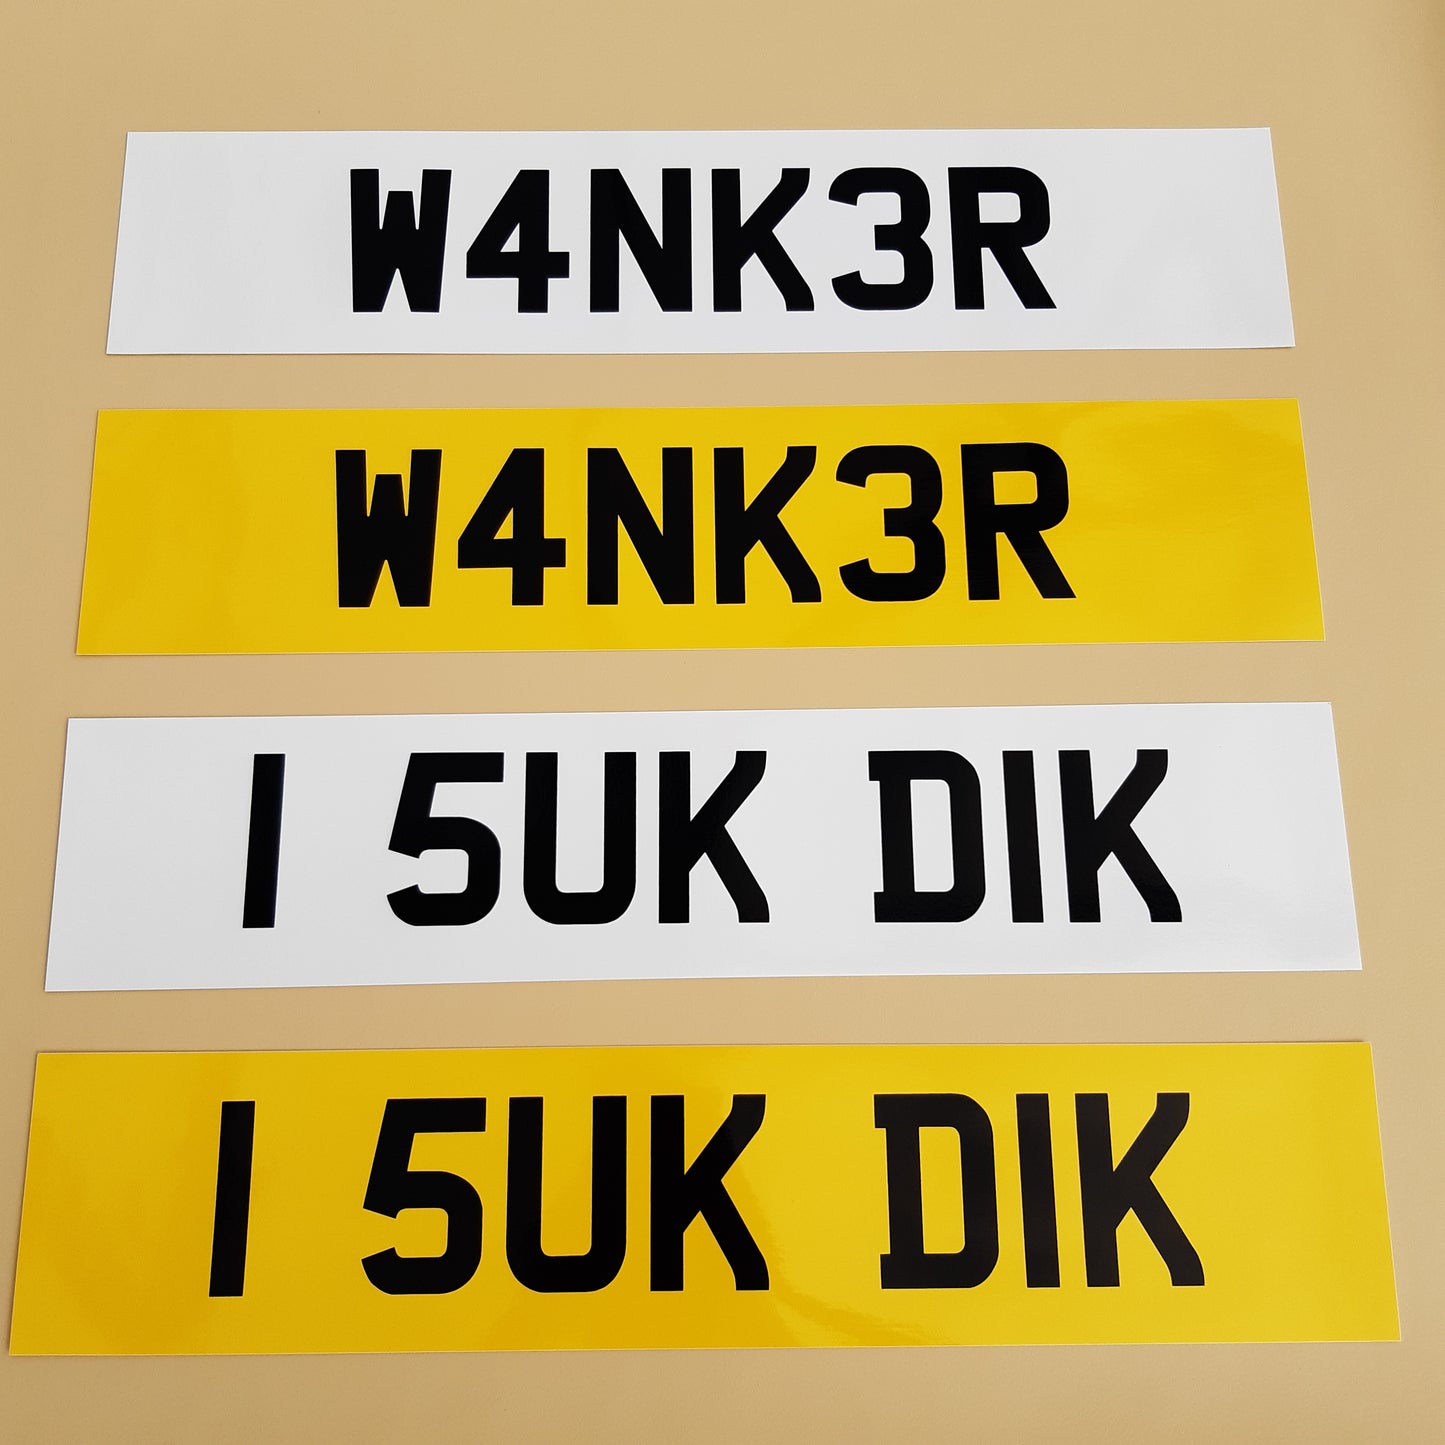 8 Joke Prank Number Plate Stickers